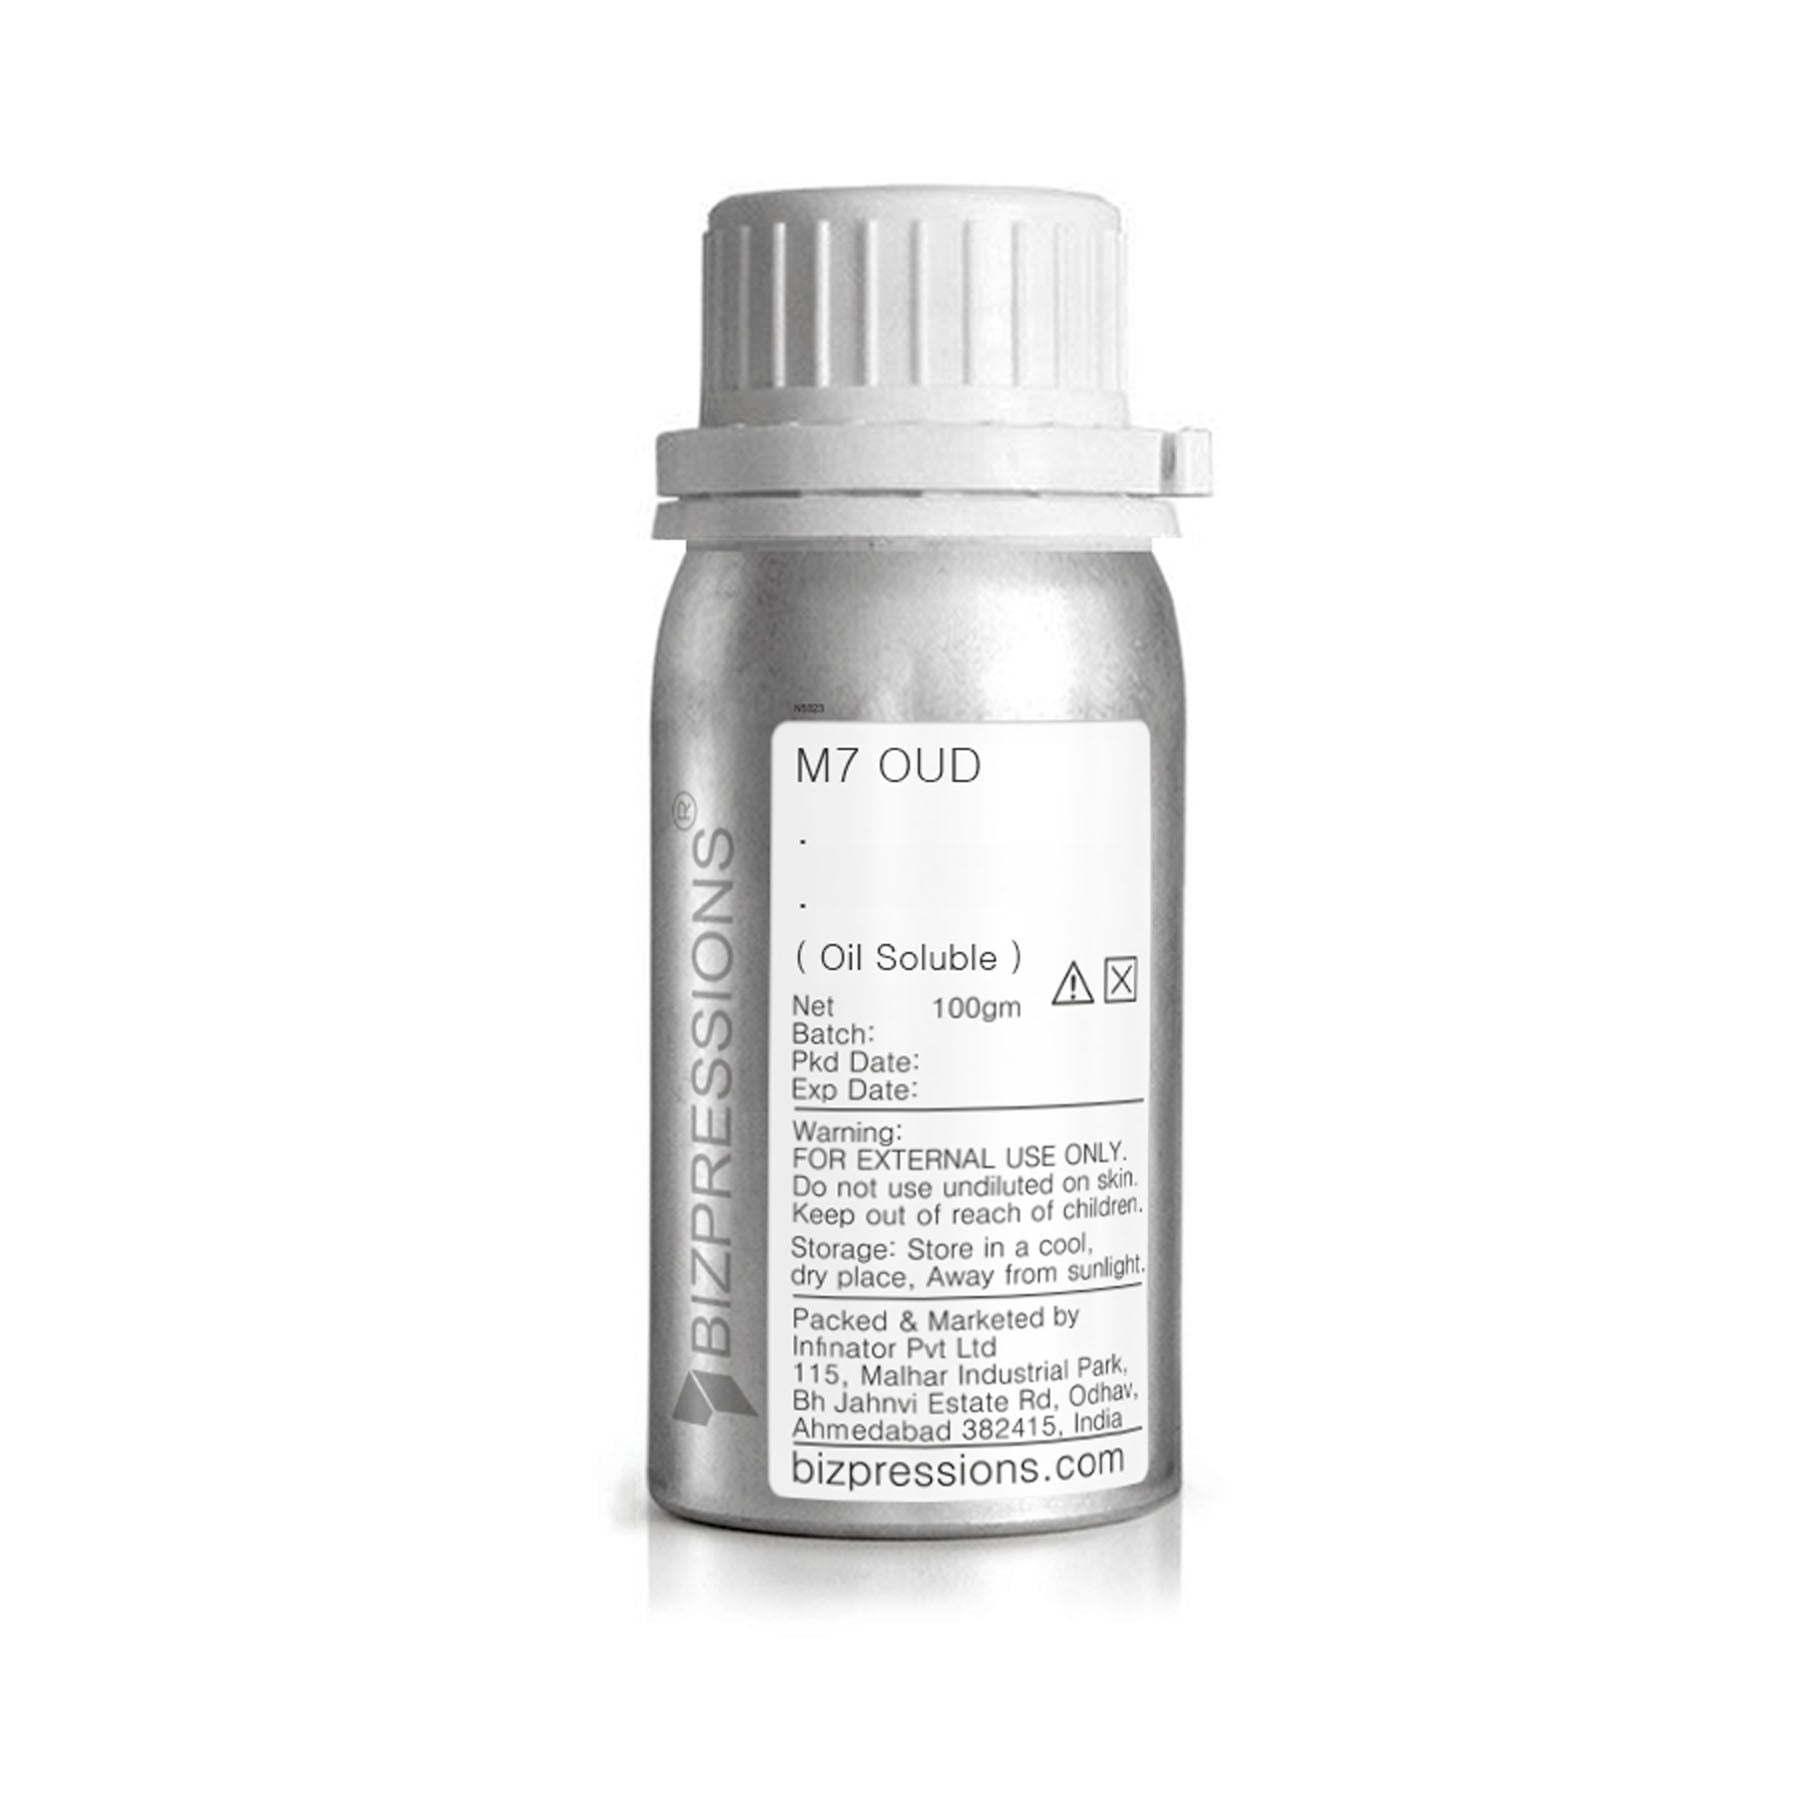 M7 OUD - Fragrance ( Oil Soluble ) - 100 gm